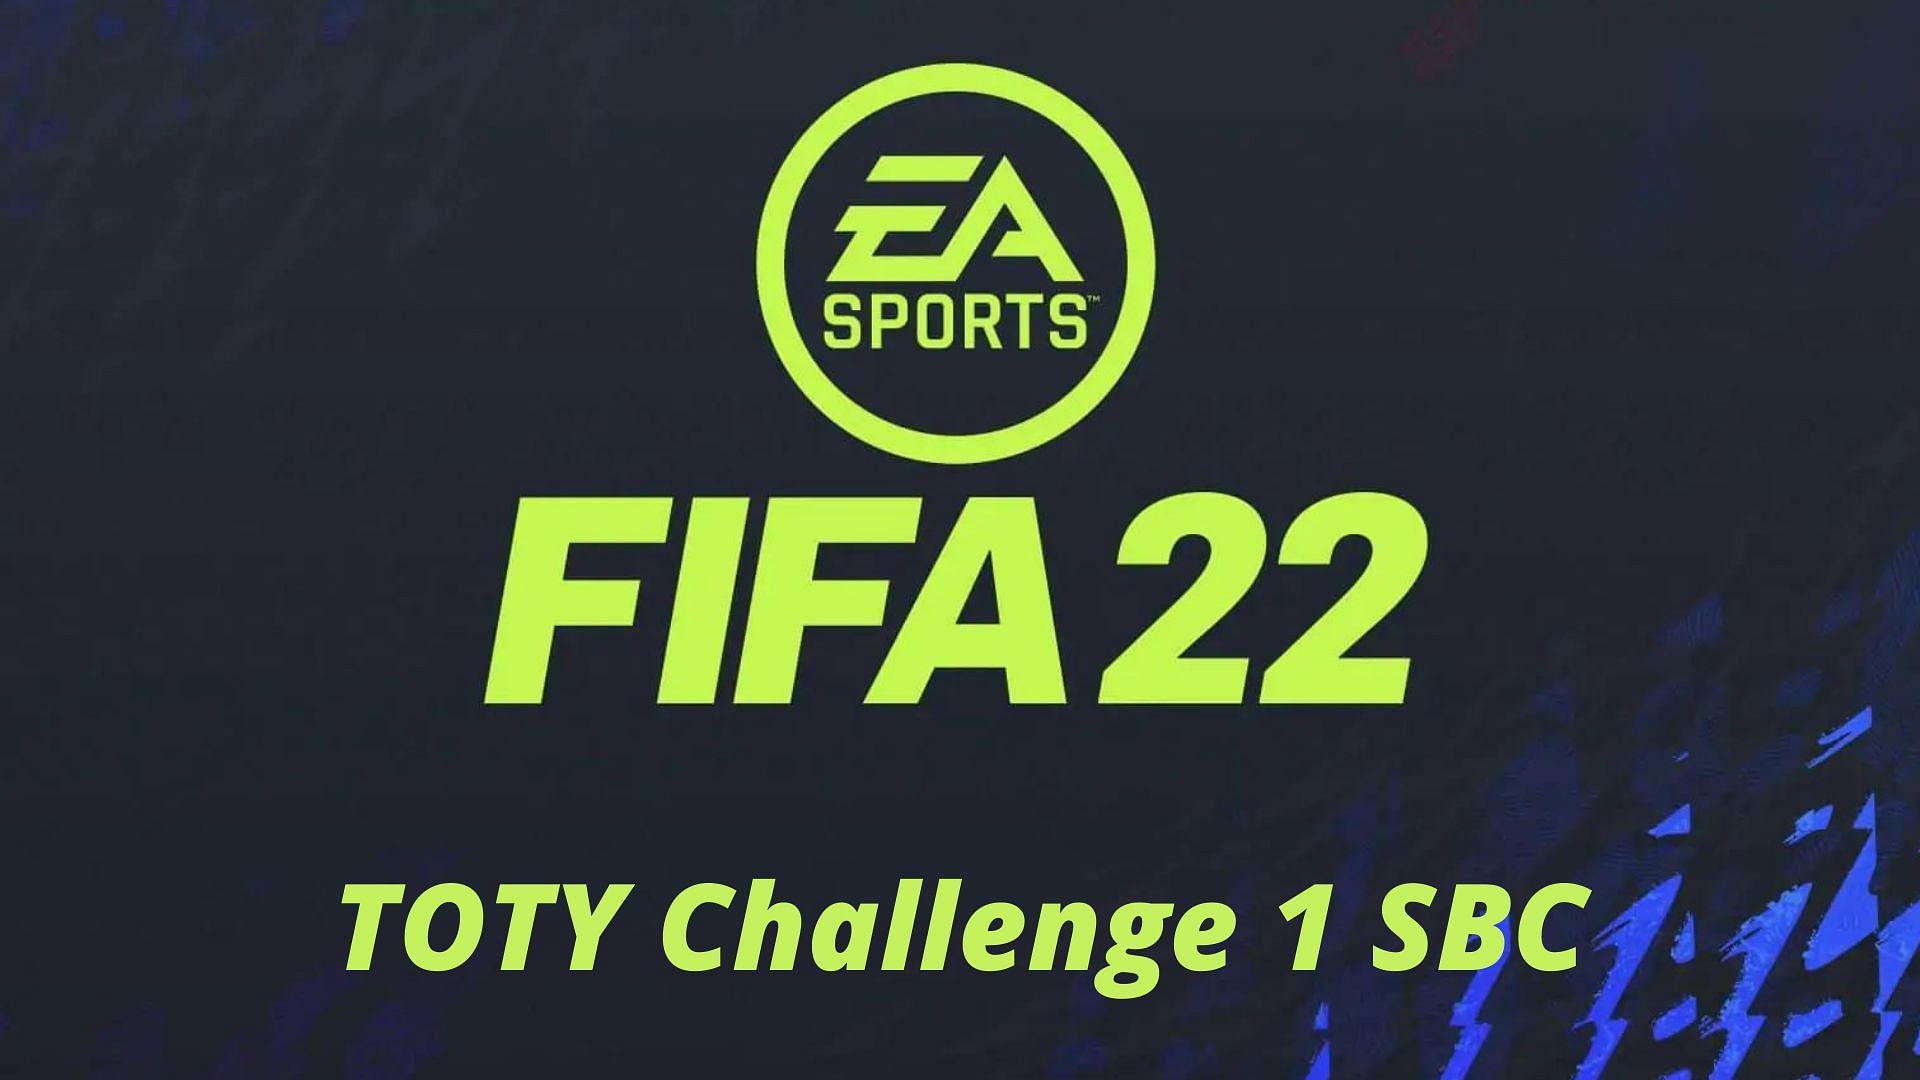 The TOTY Challenge 1 SBC is now live in FIFA 22 (Image via Sportskeeda)